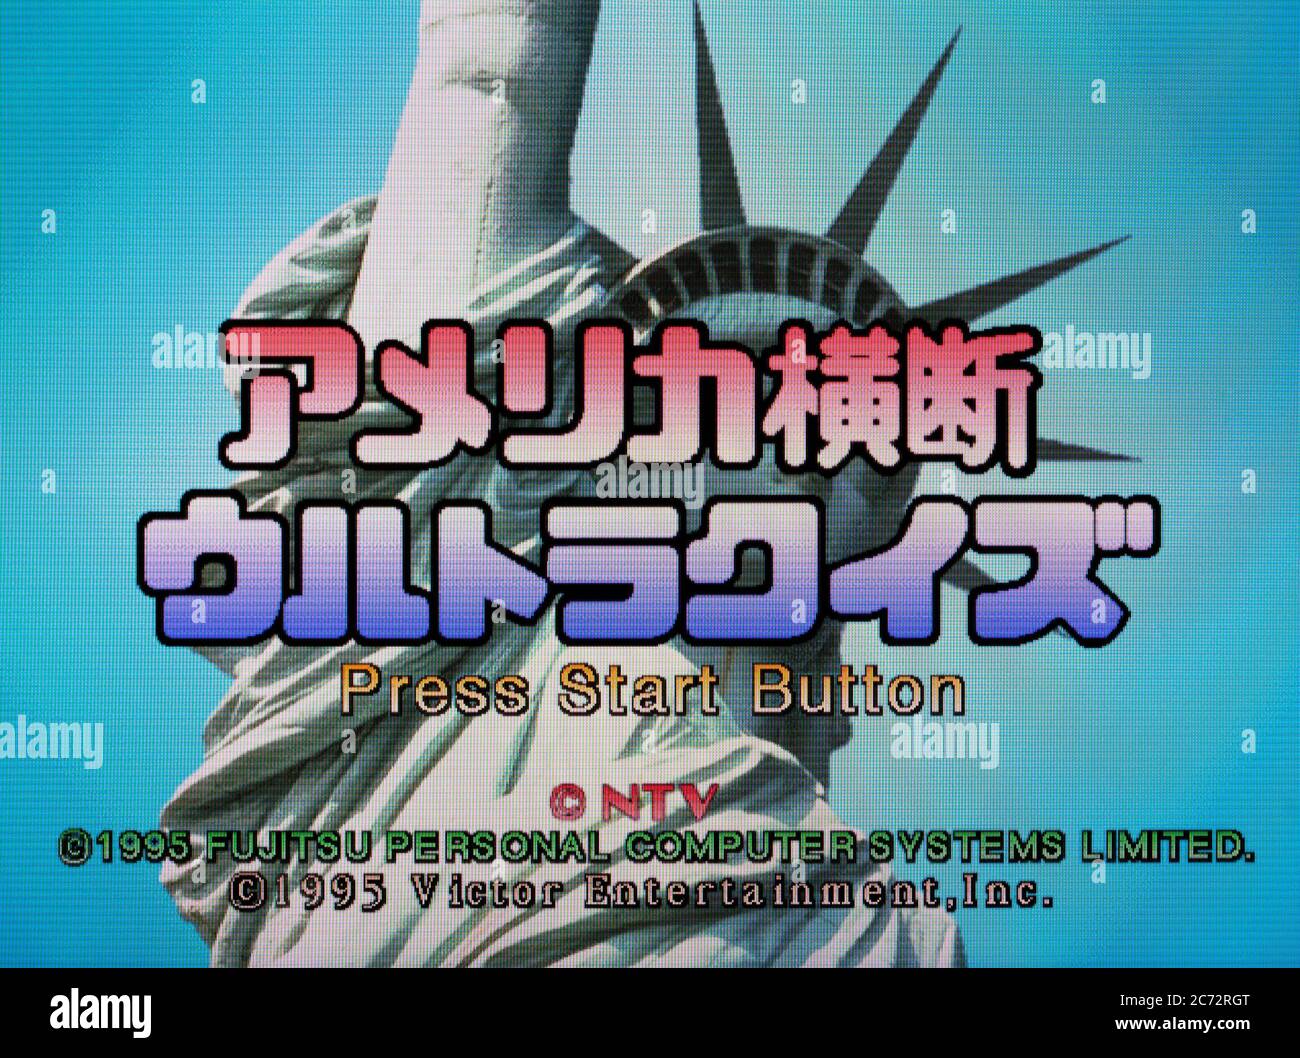 America Oudan Ultra Quiz - Sega Saturn Videogame - Editorial use only Stock Photo